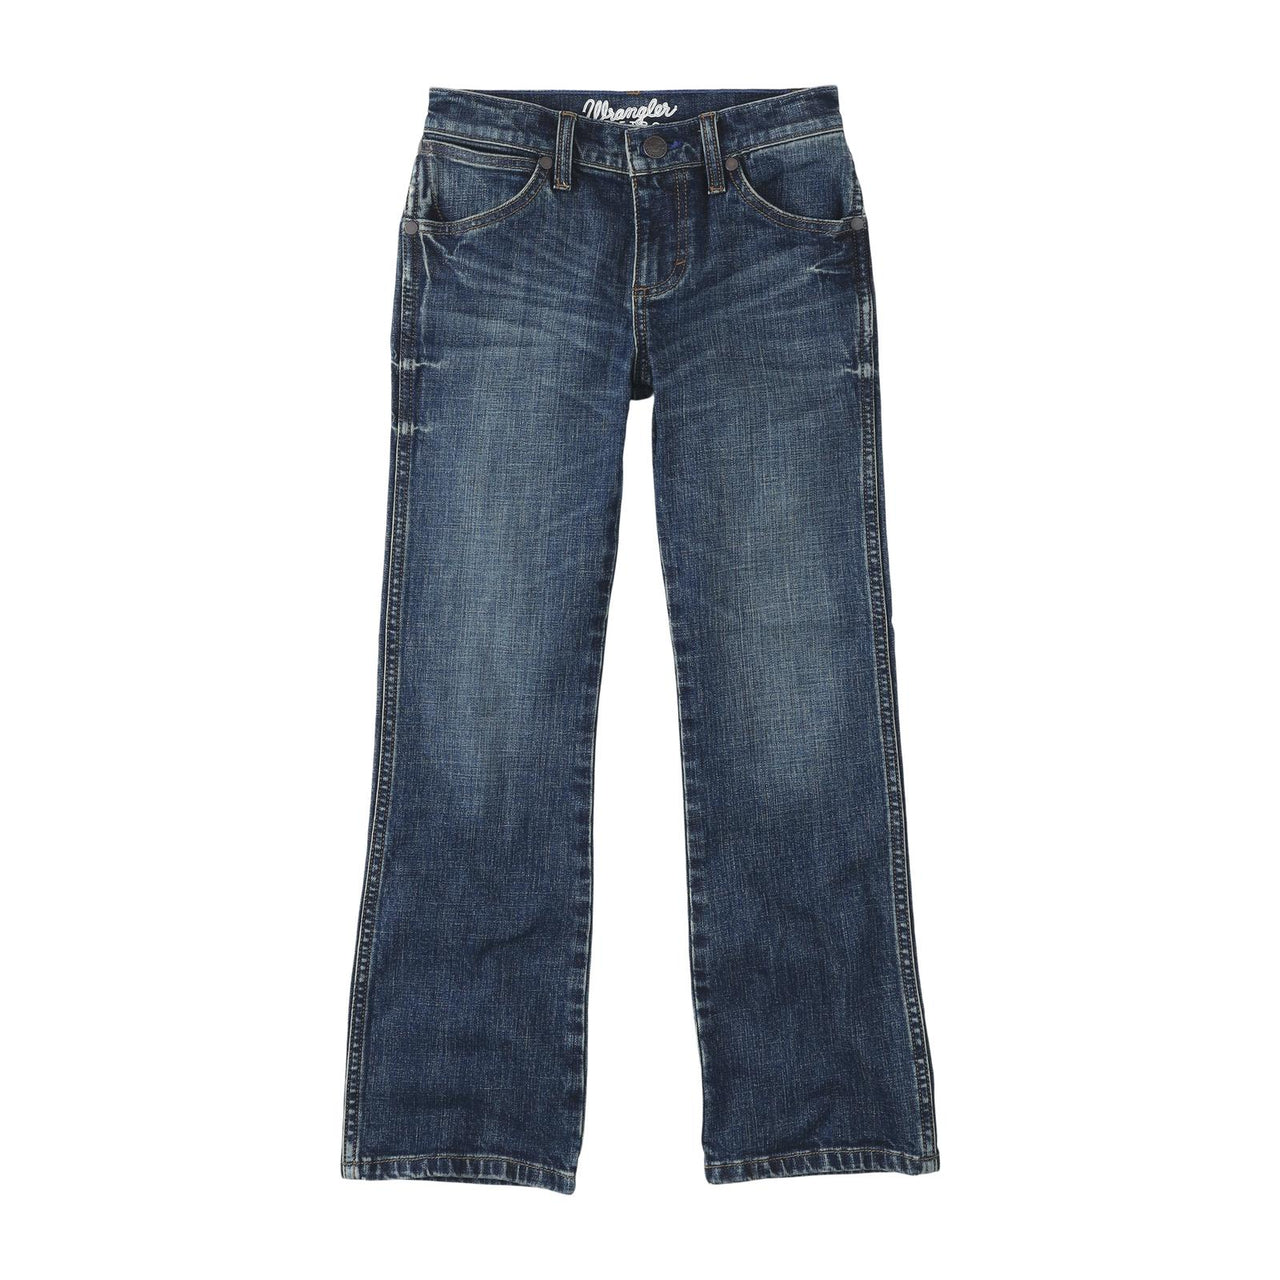 Wrangler Boys Retro Slim Boot Cut Jeans (8-20) - Layton